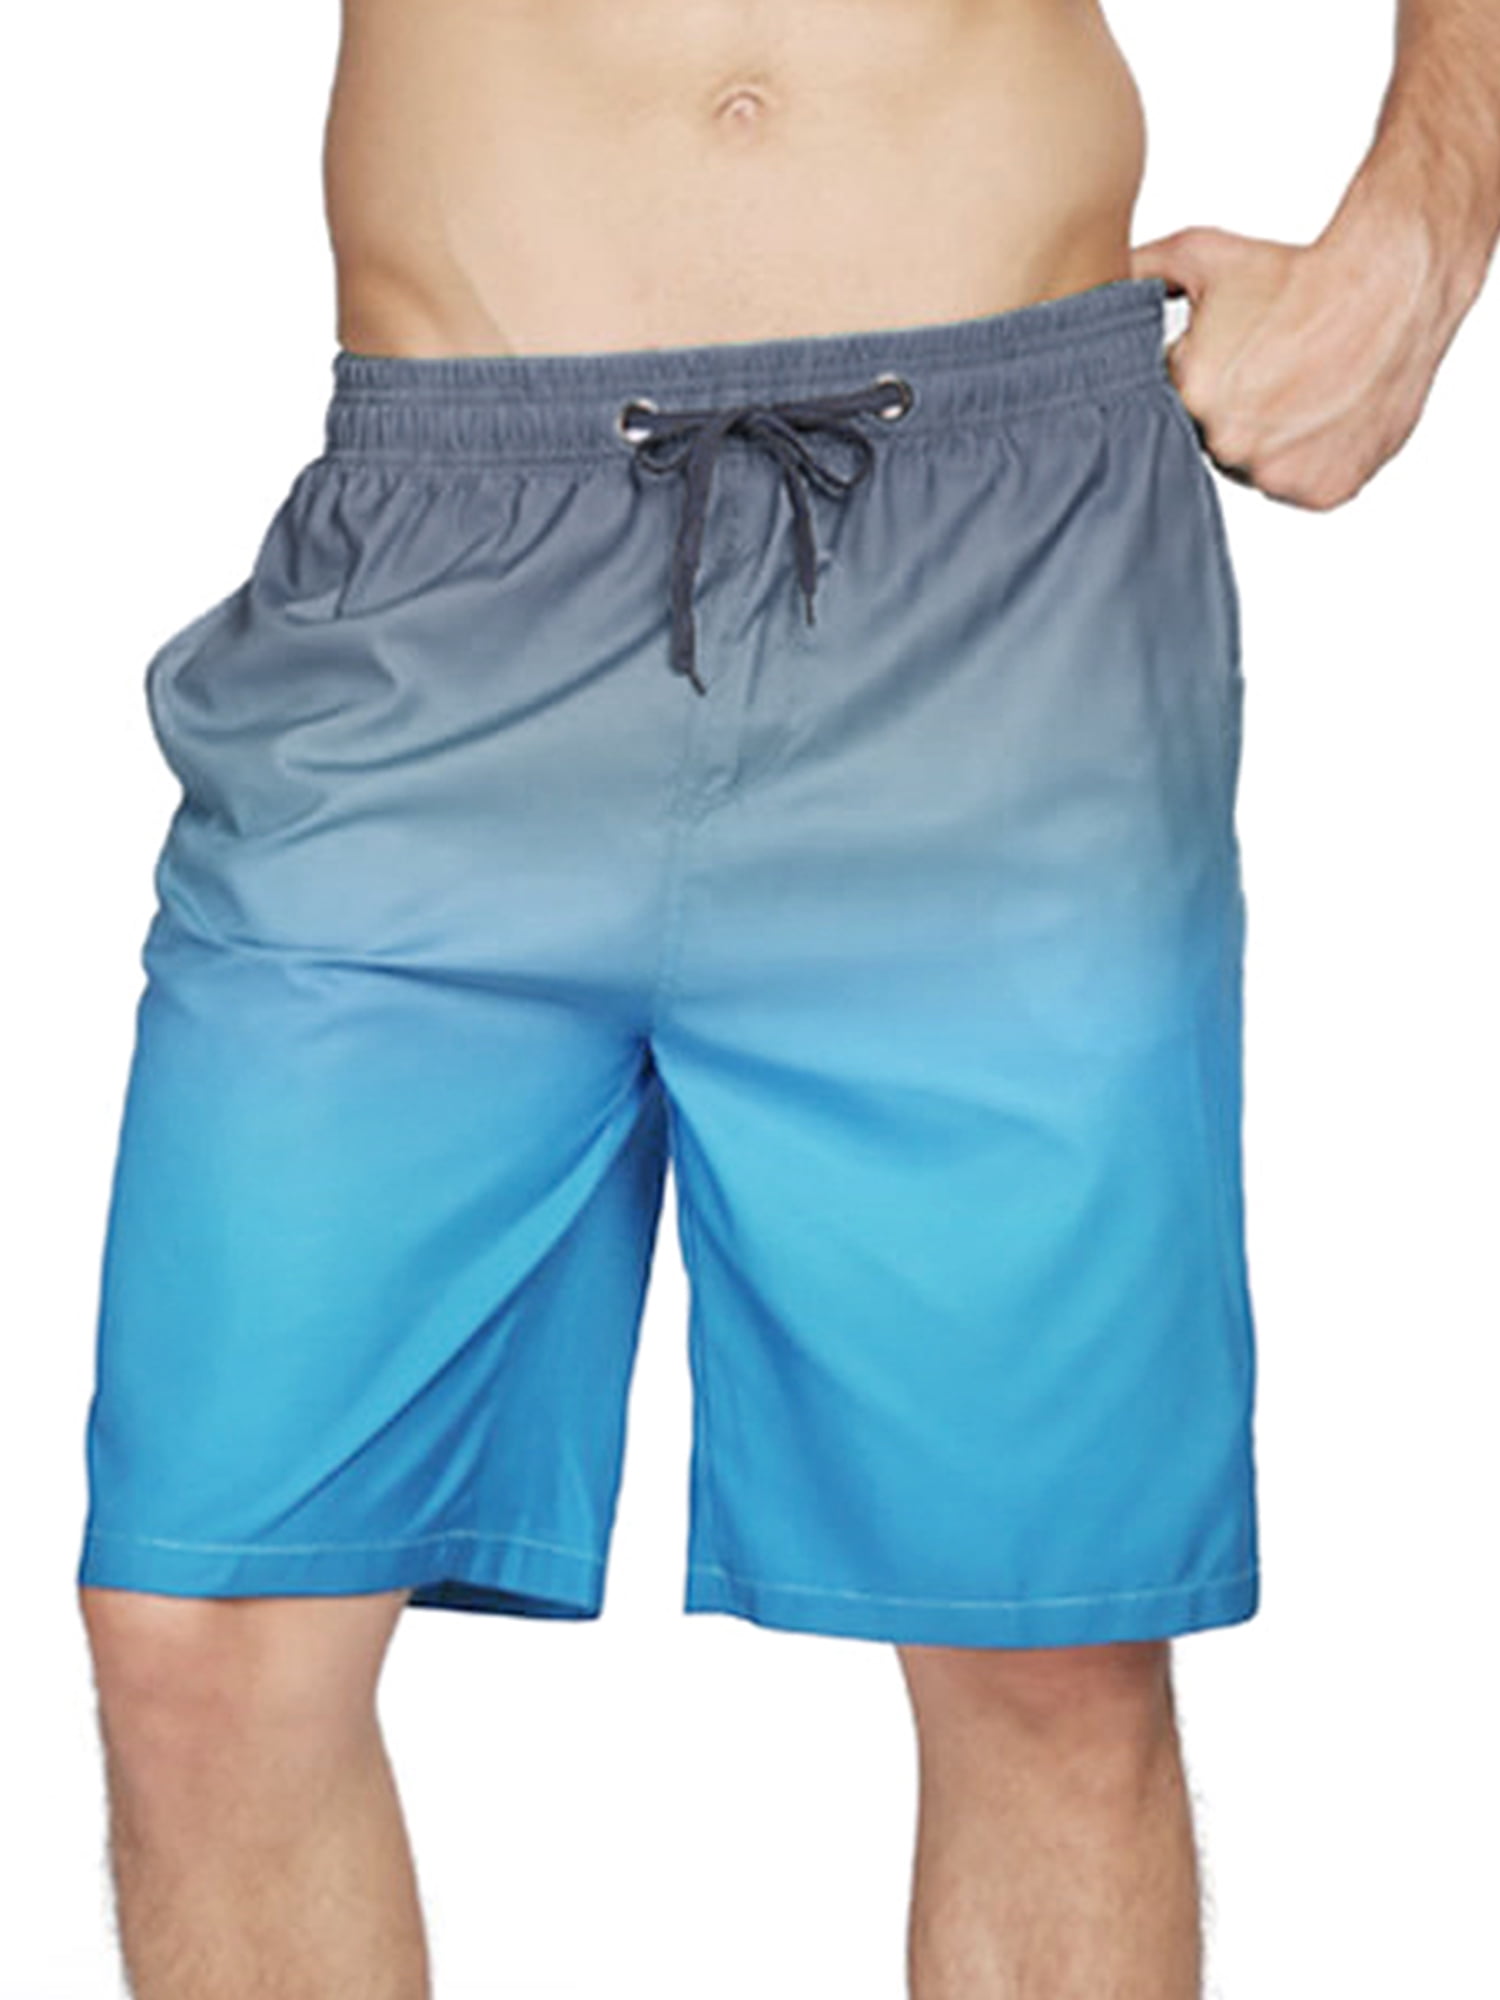 Men‘s Swimwear Surf Board Beach Swim Brief Trunks Shorts Swimsuits with Pockets 